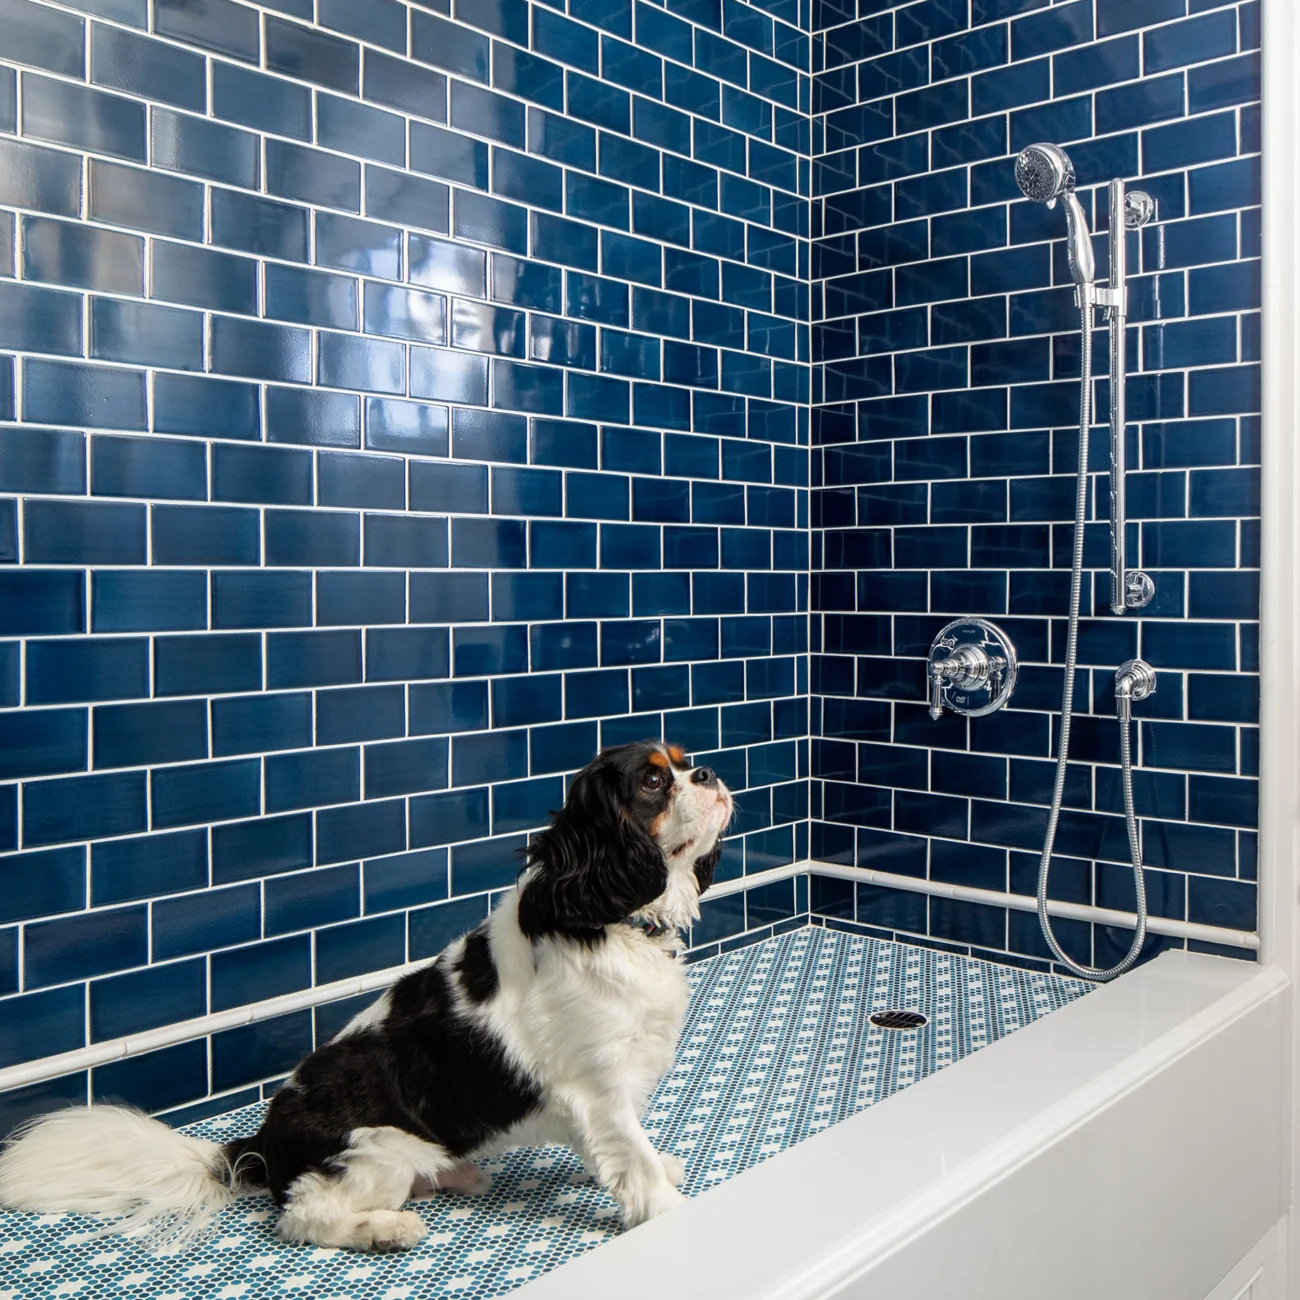 Christine Vroom Interiors Strawberry Lane | Dark blue subway tiles in contemporary bathroom inside glass shower